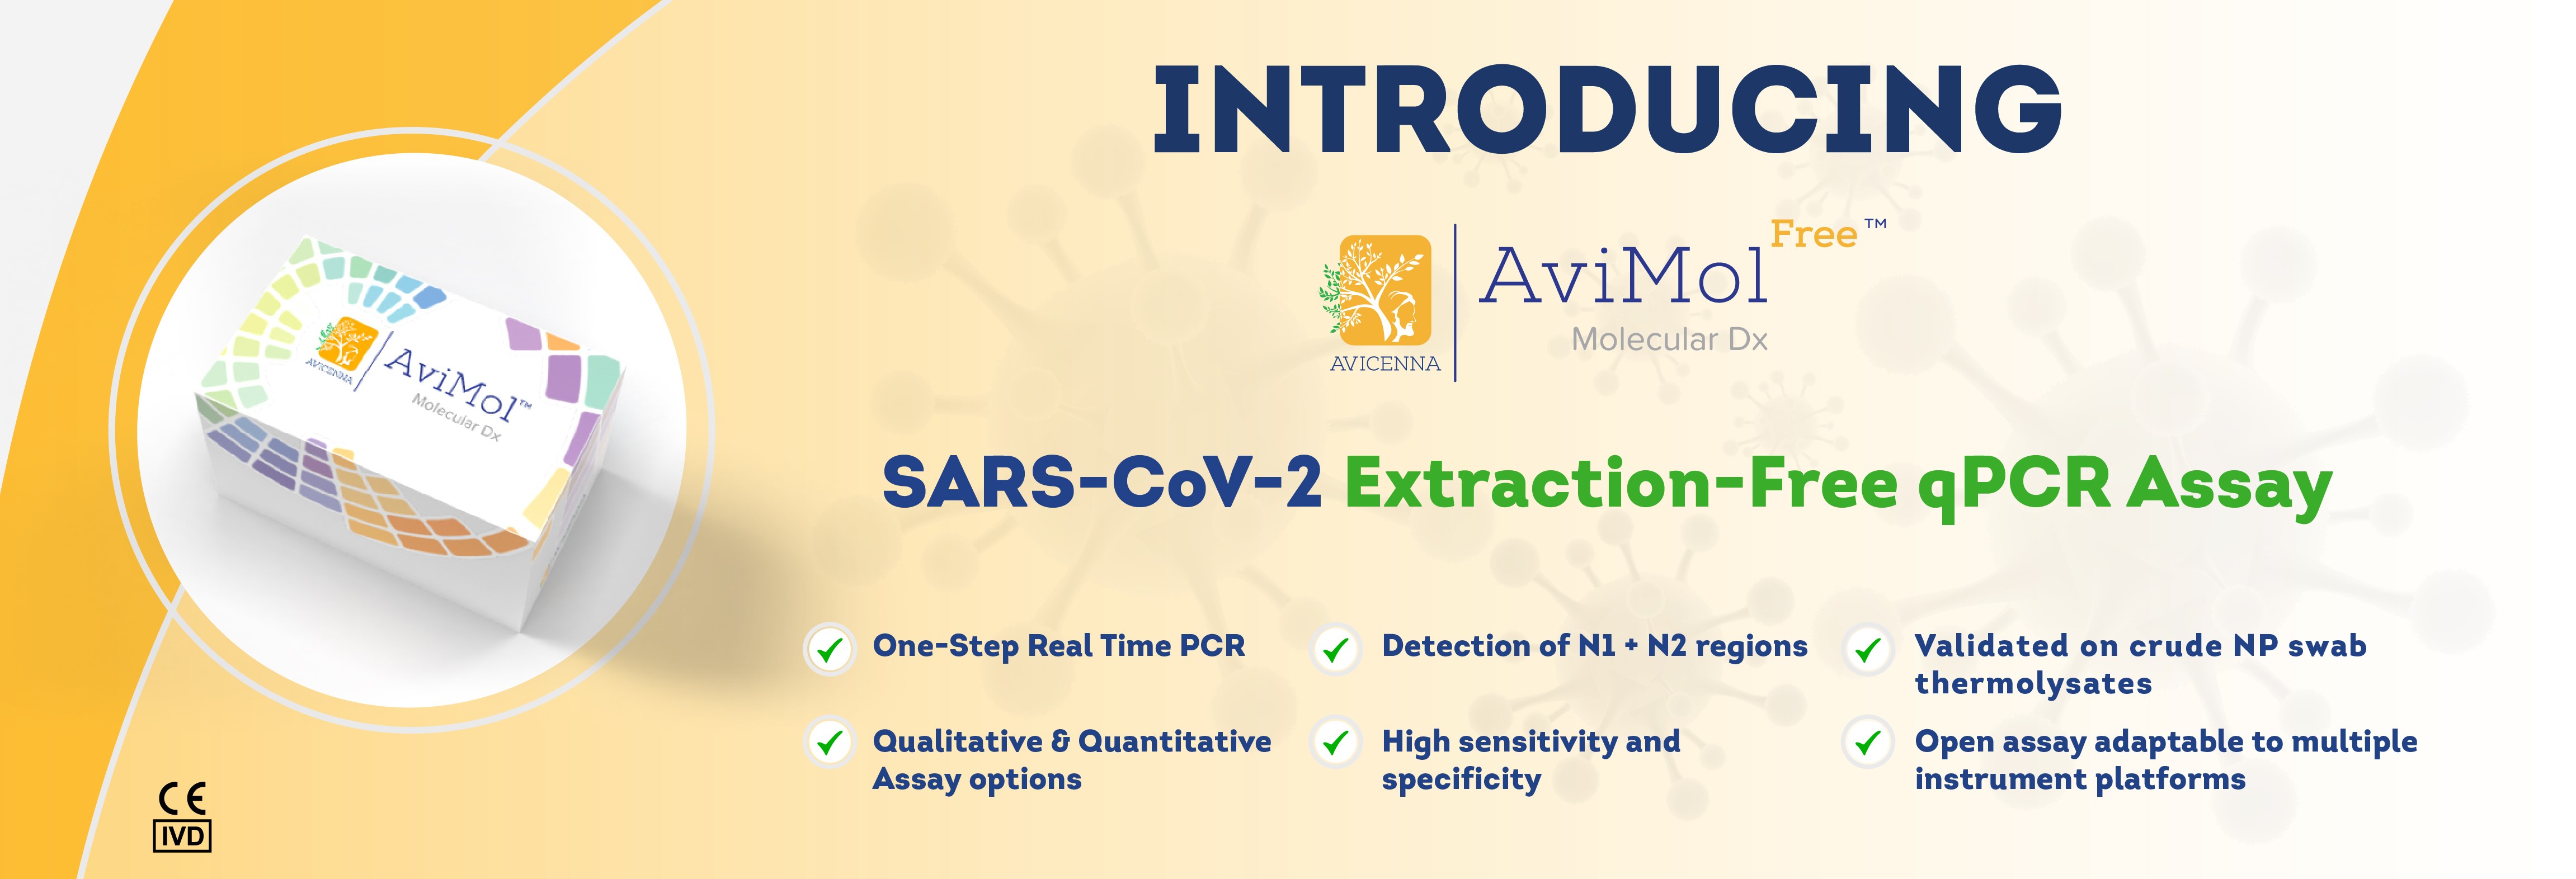 Avicenna launches the AviMol Free™ SARS-CoV-2 Extraction-Free qPCR Assay